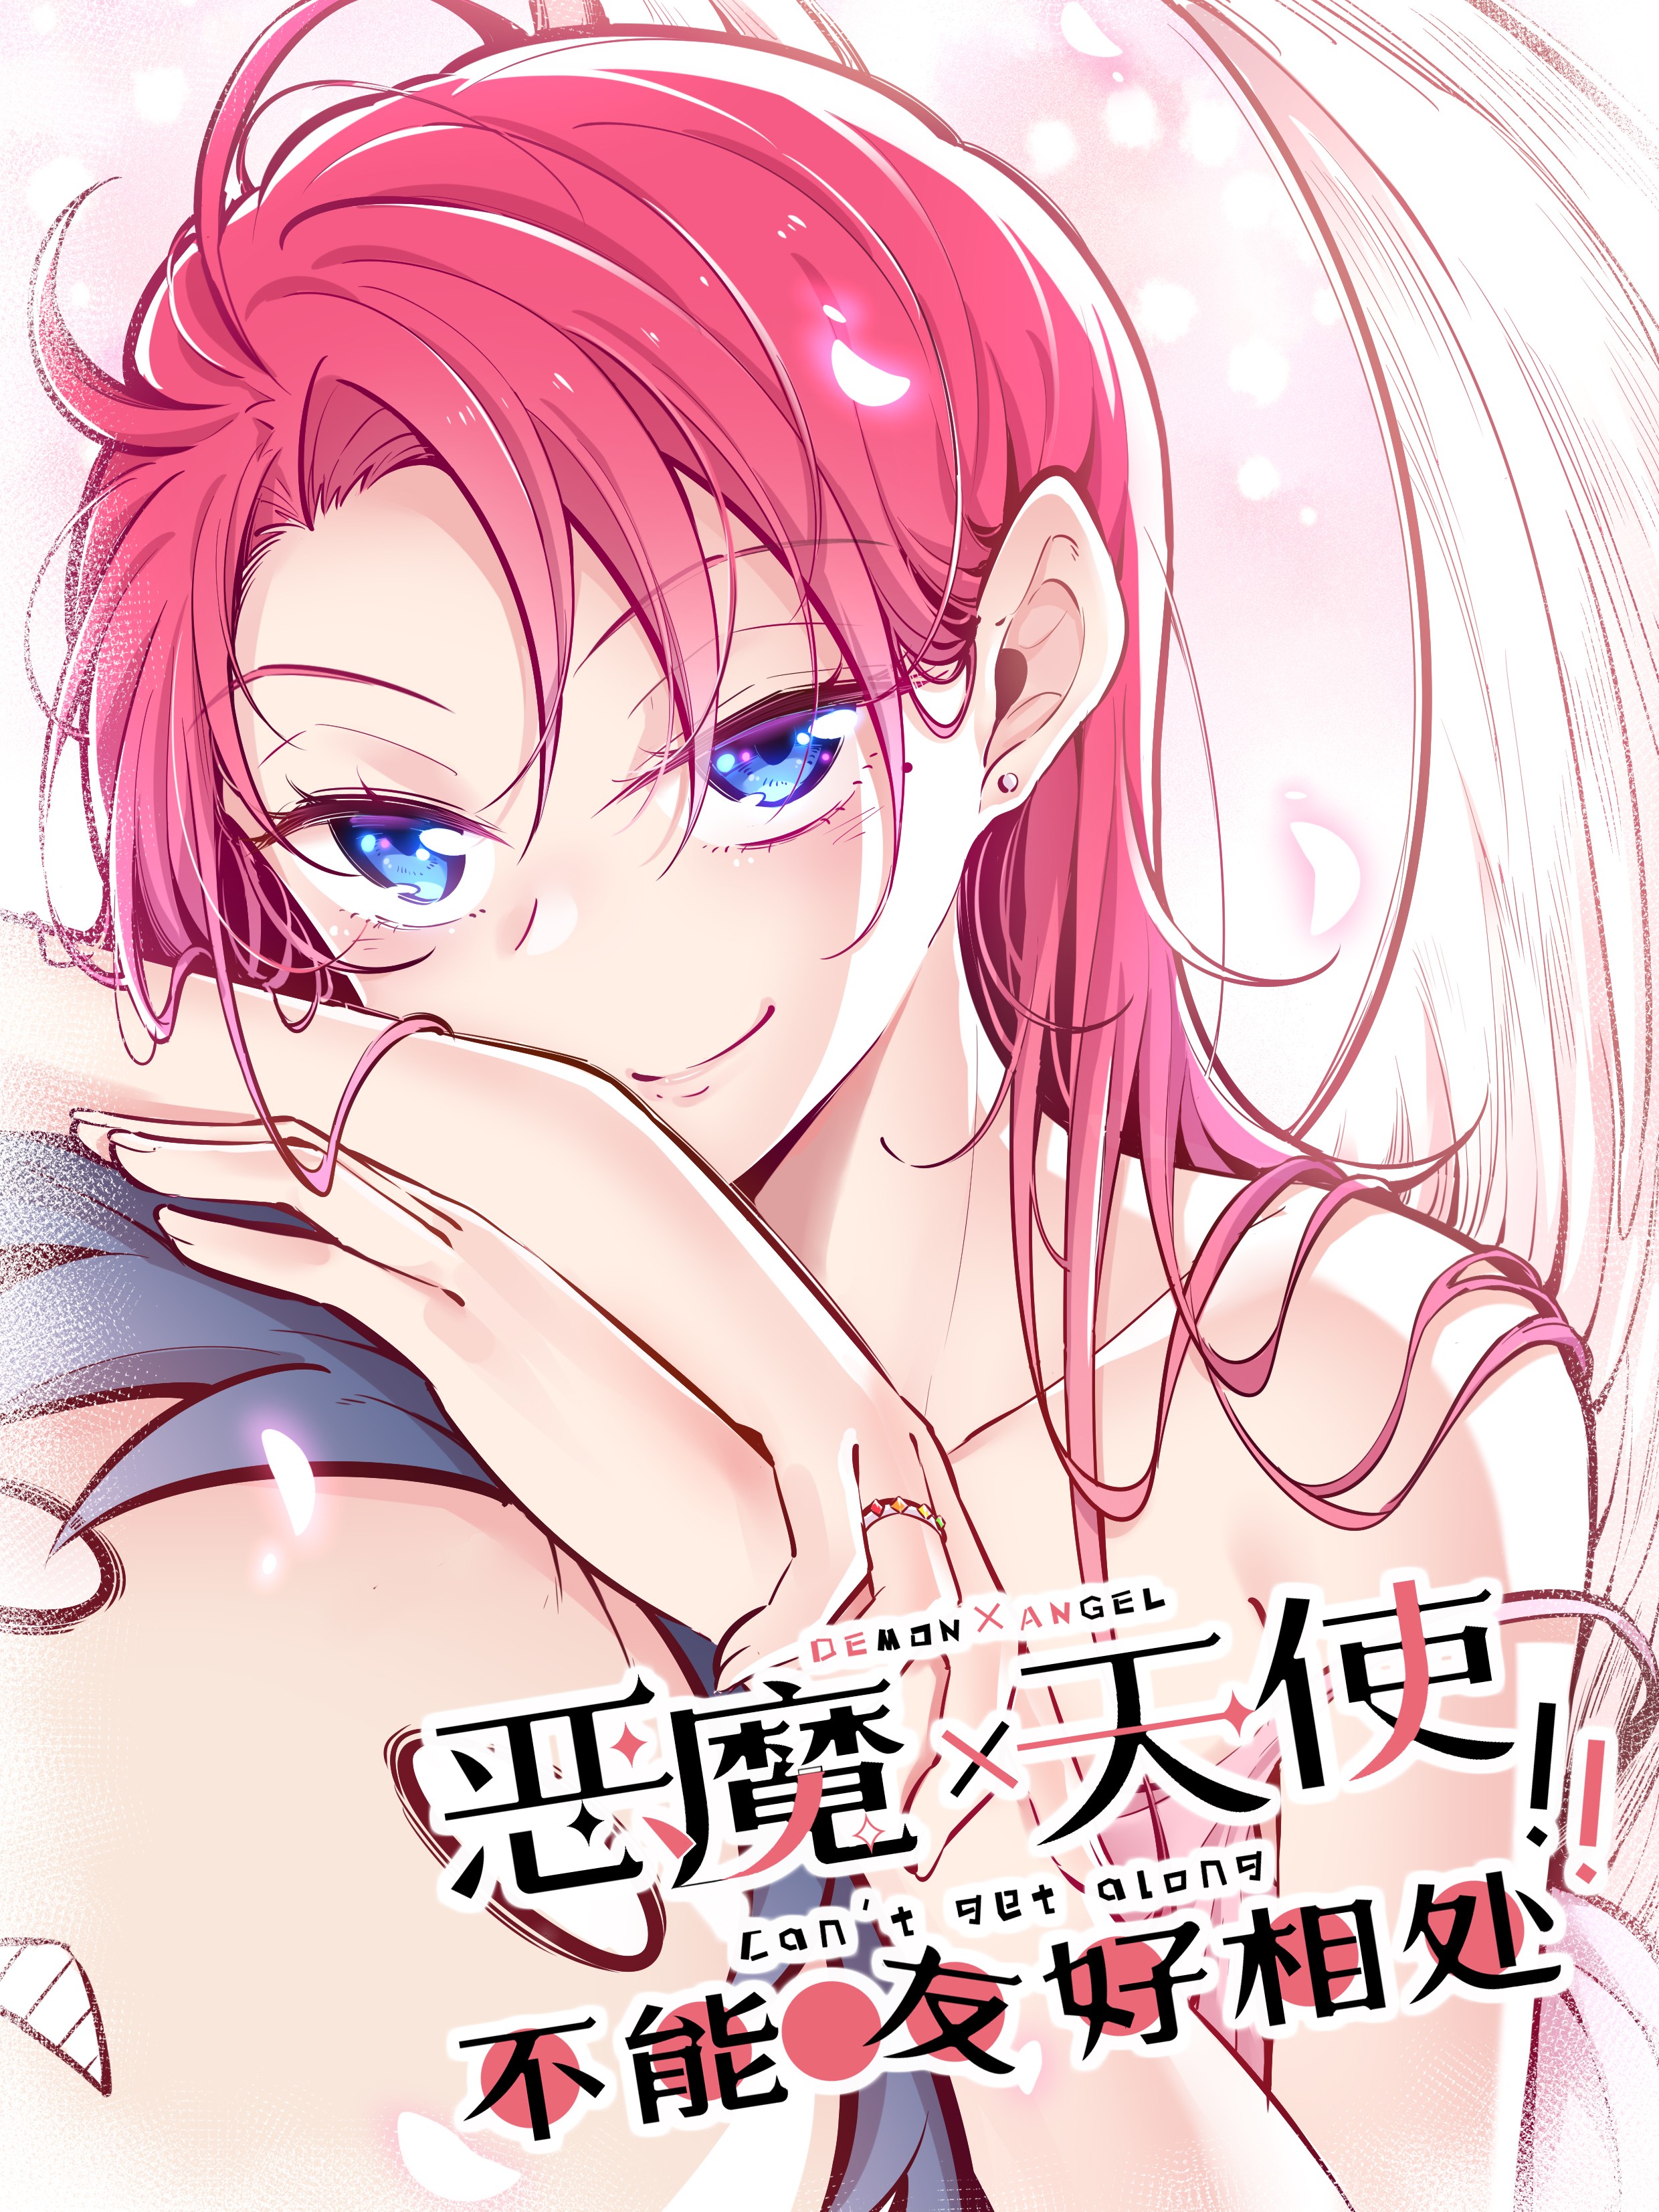 Angels and demons manga